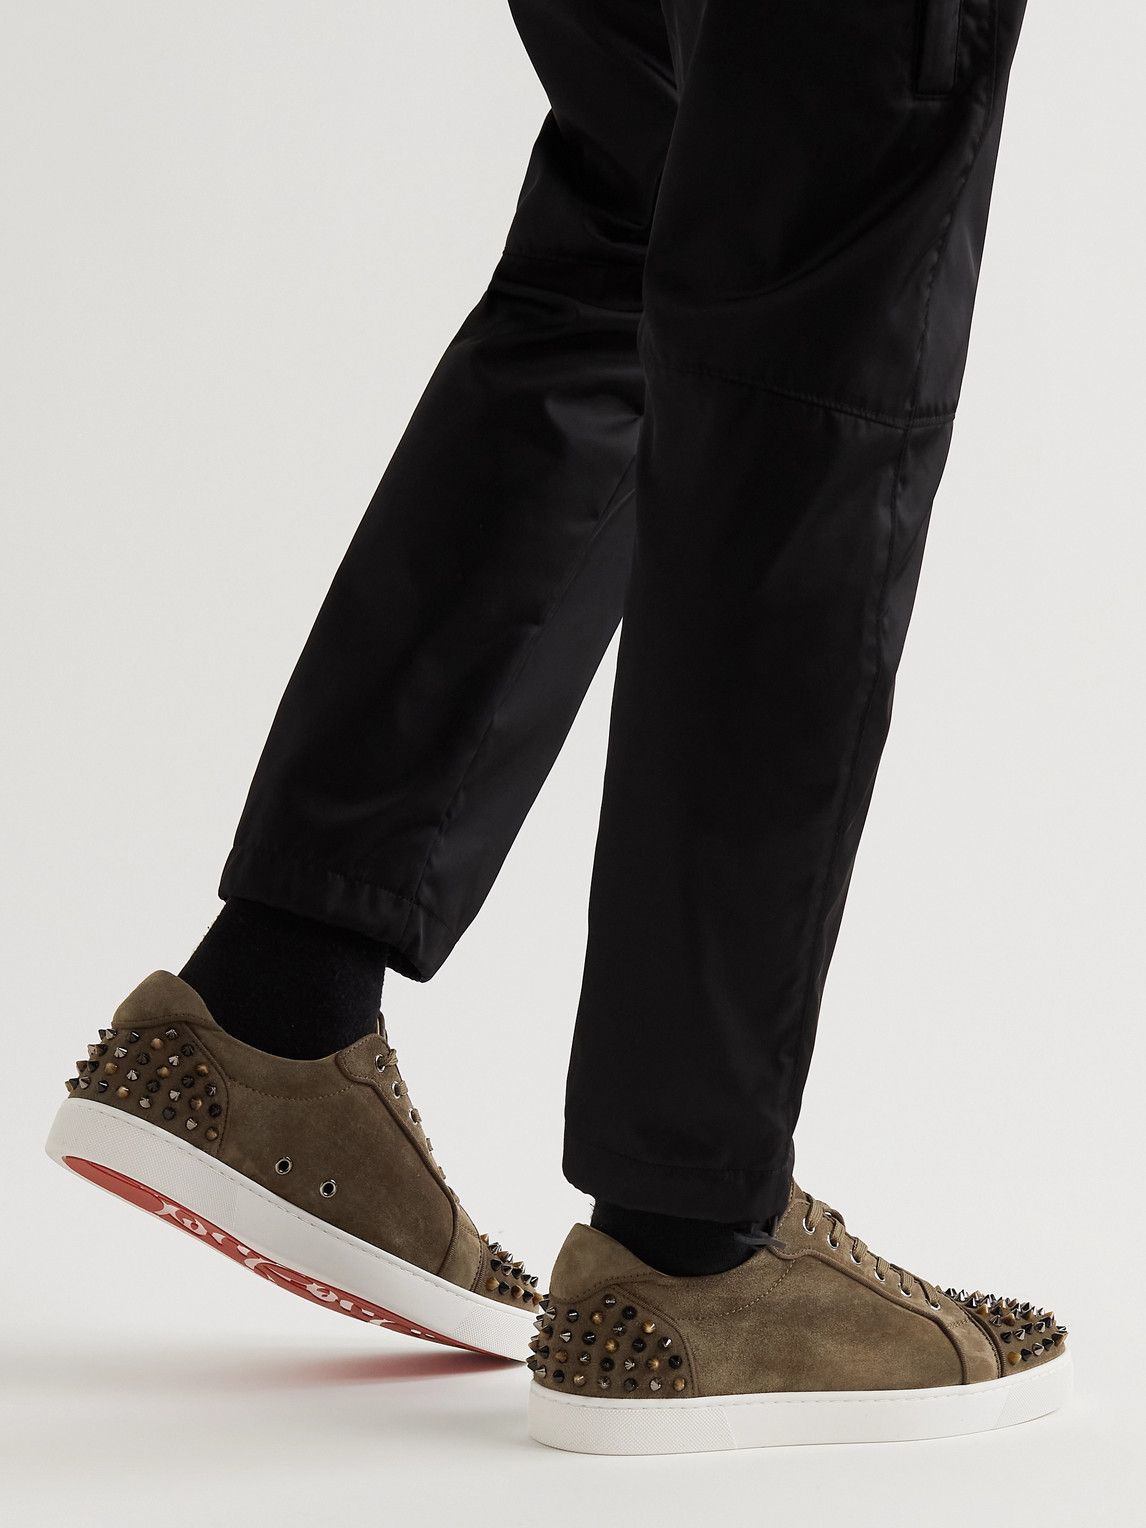 Christian Louboutin Seavaste 2 Low Top Sneaker, $1,095